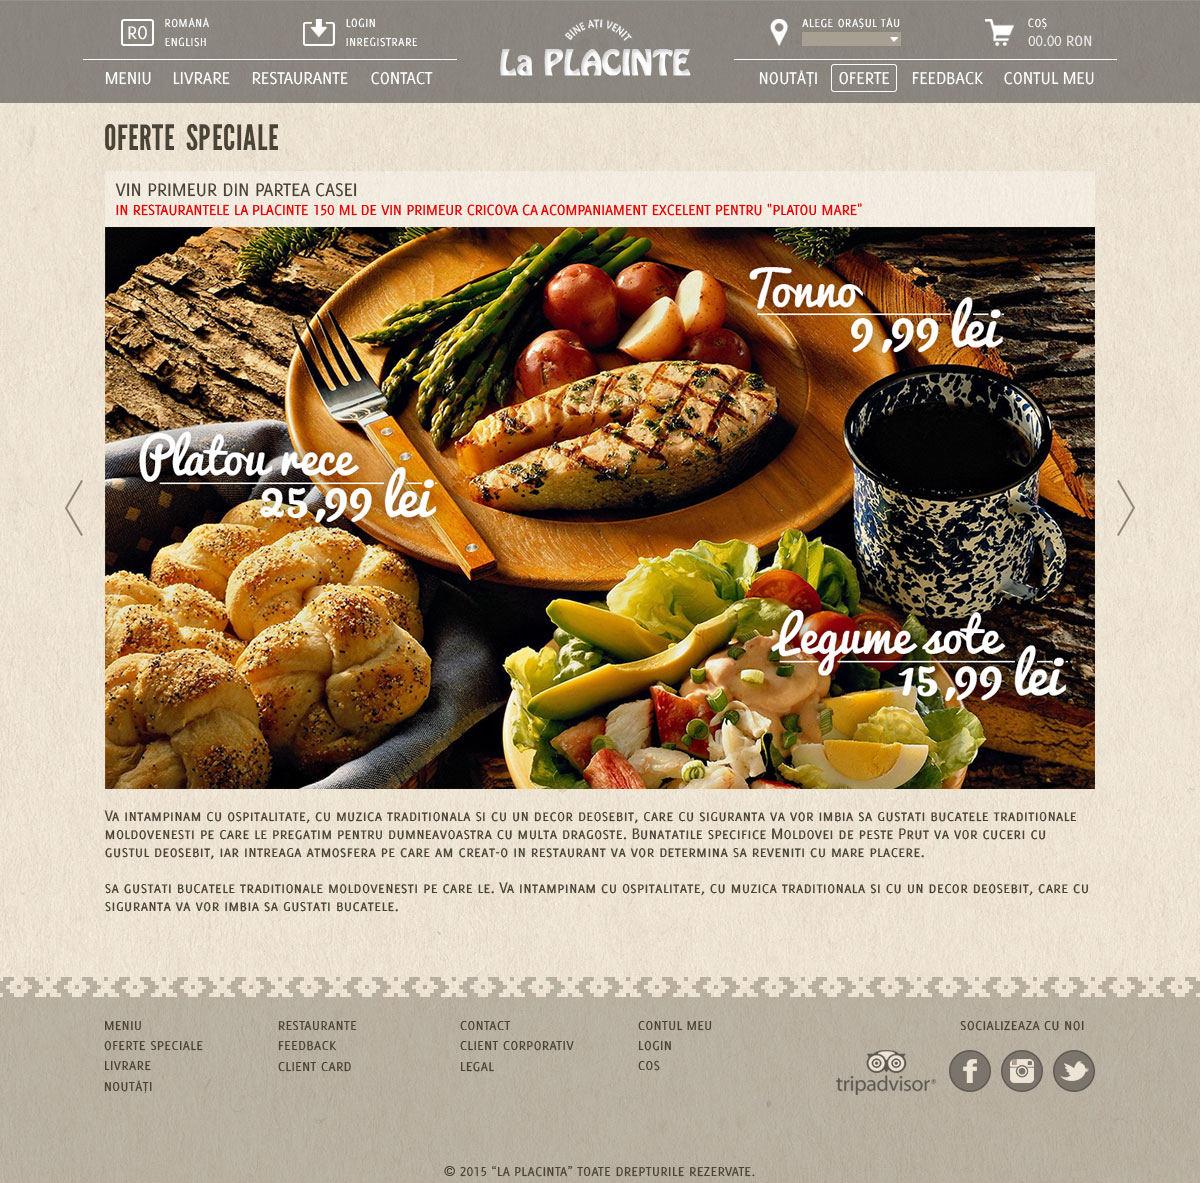 Website for the chain of restaurants La Placinte